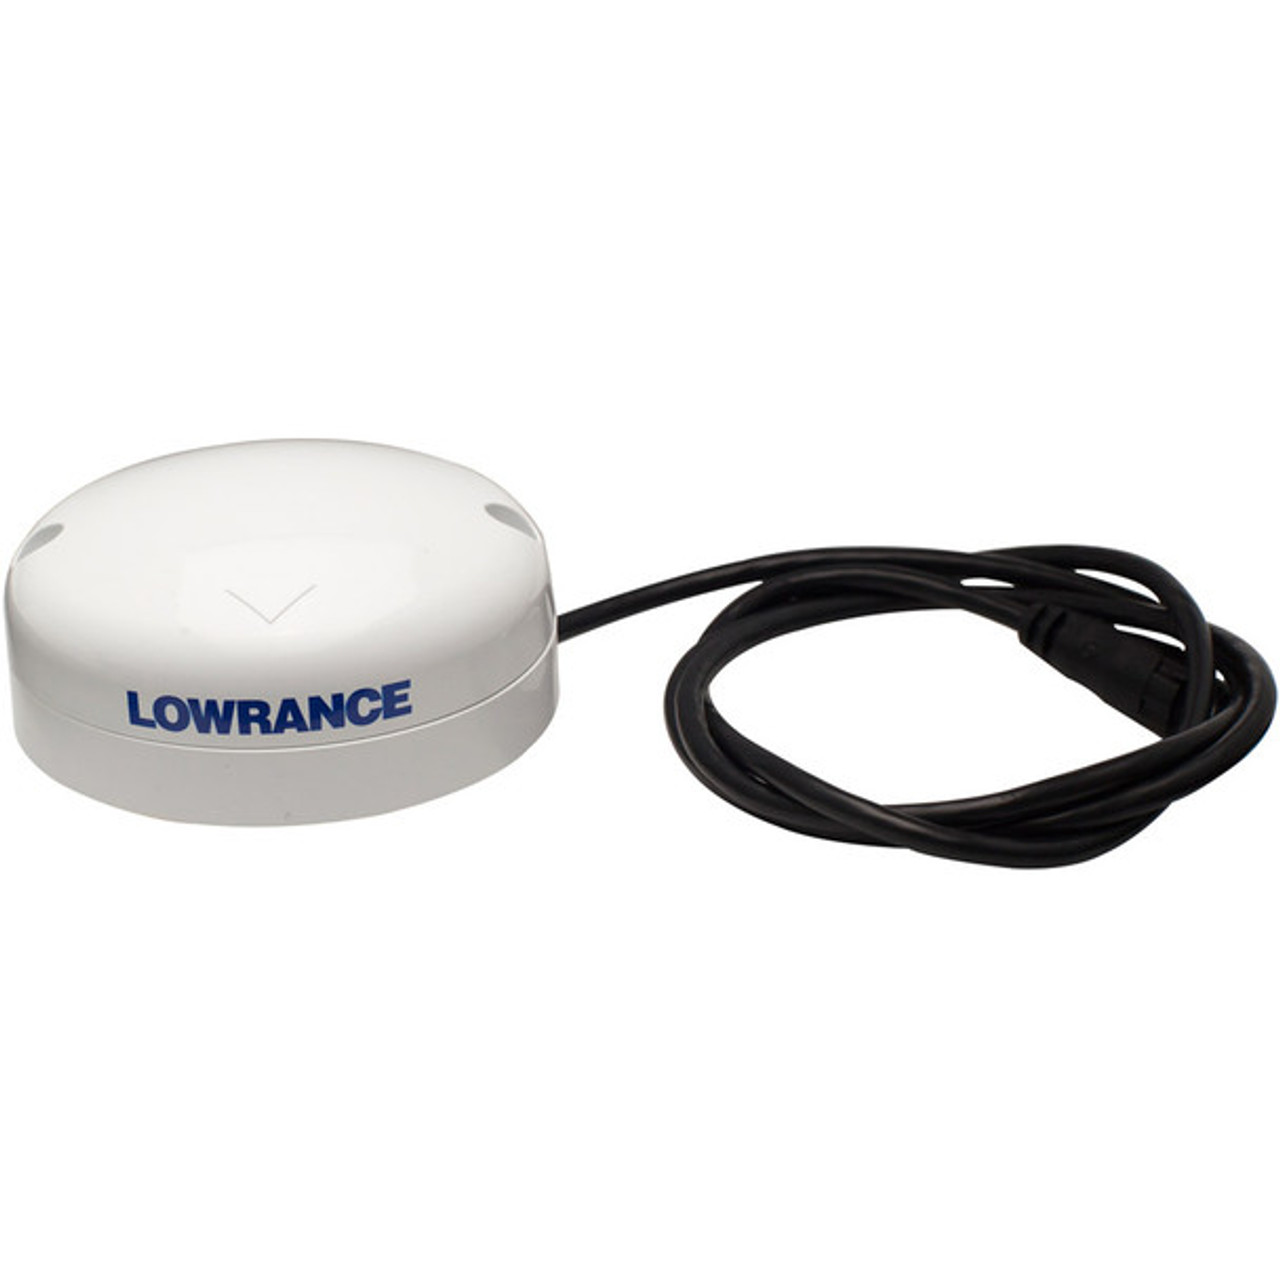 Lowrance GPS-500 - GPS antenna for NAIS-500 AIS transceiver (000